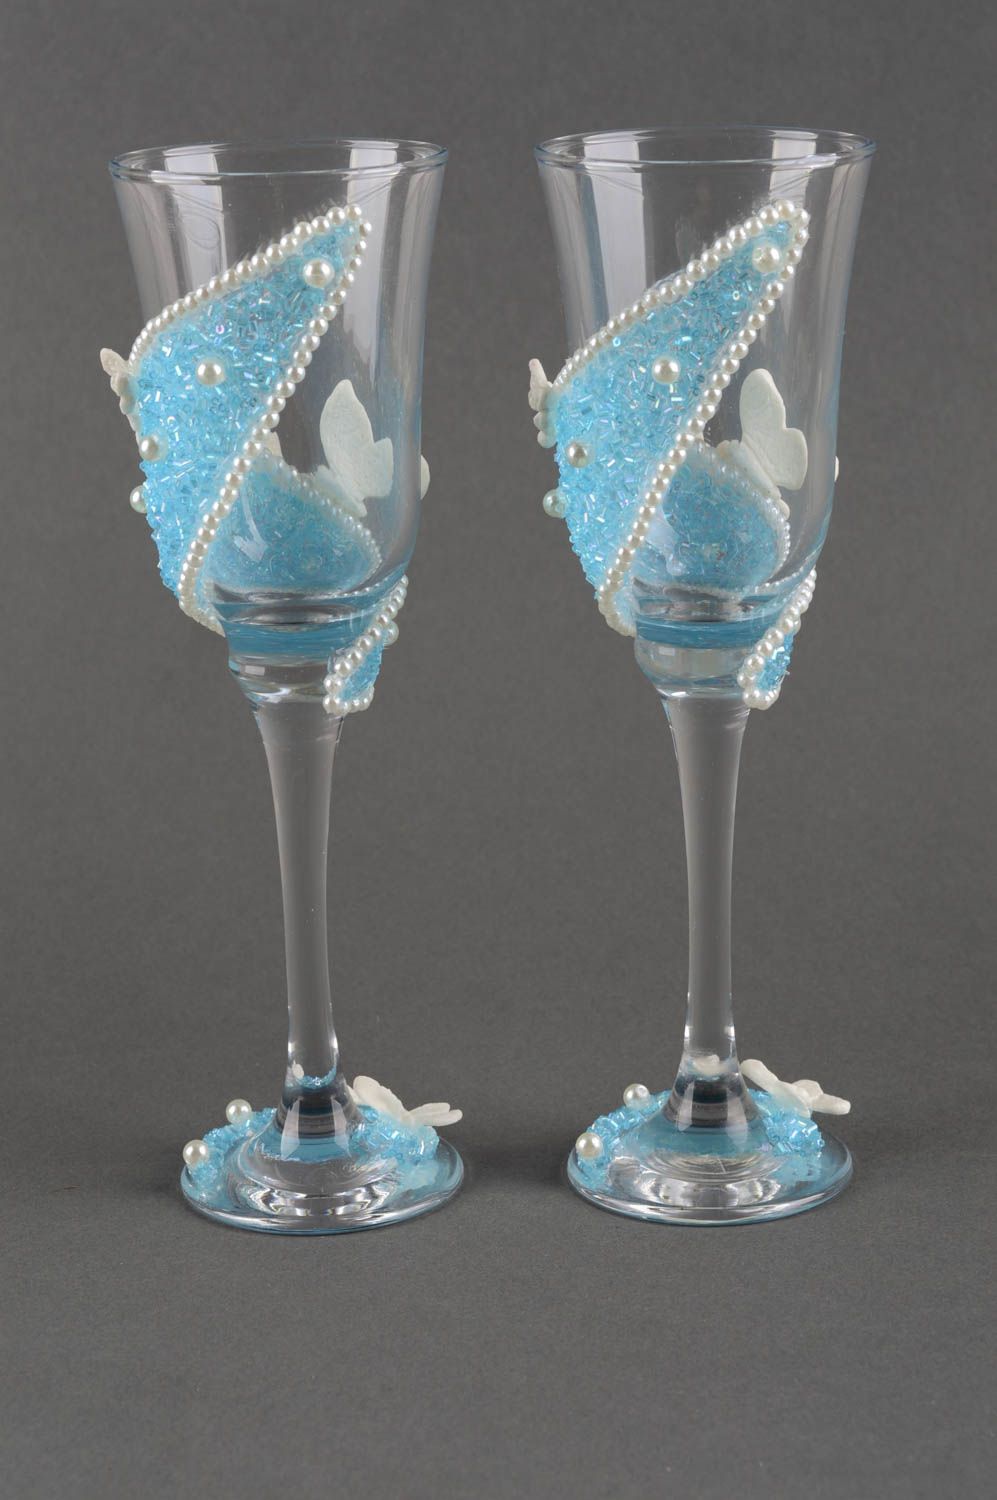 Beautiful handmade wedding glasses wine glass types wedding accessories photo 8